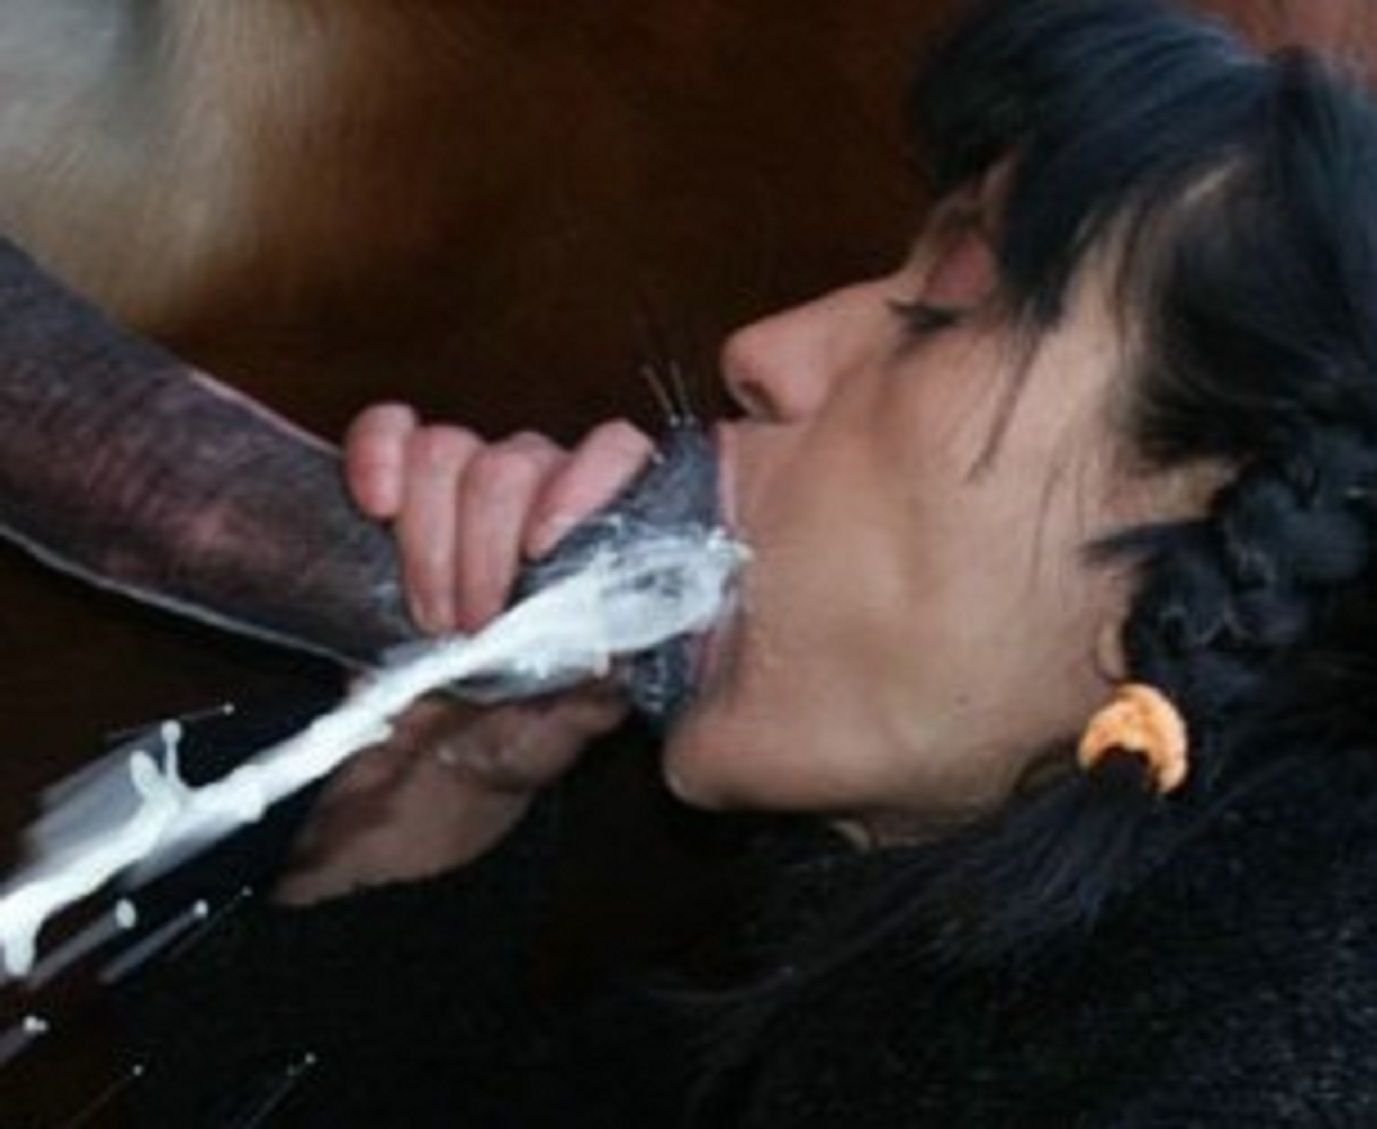 Horse cumming in woman